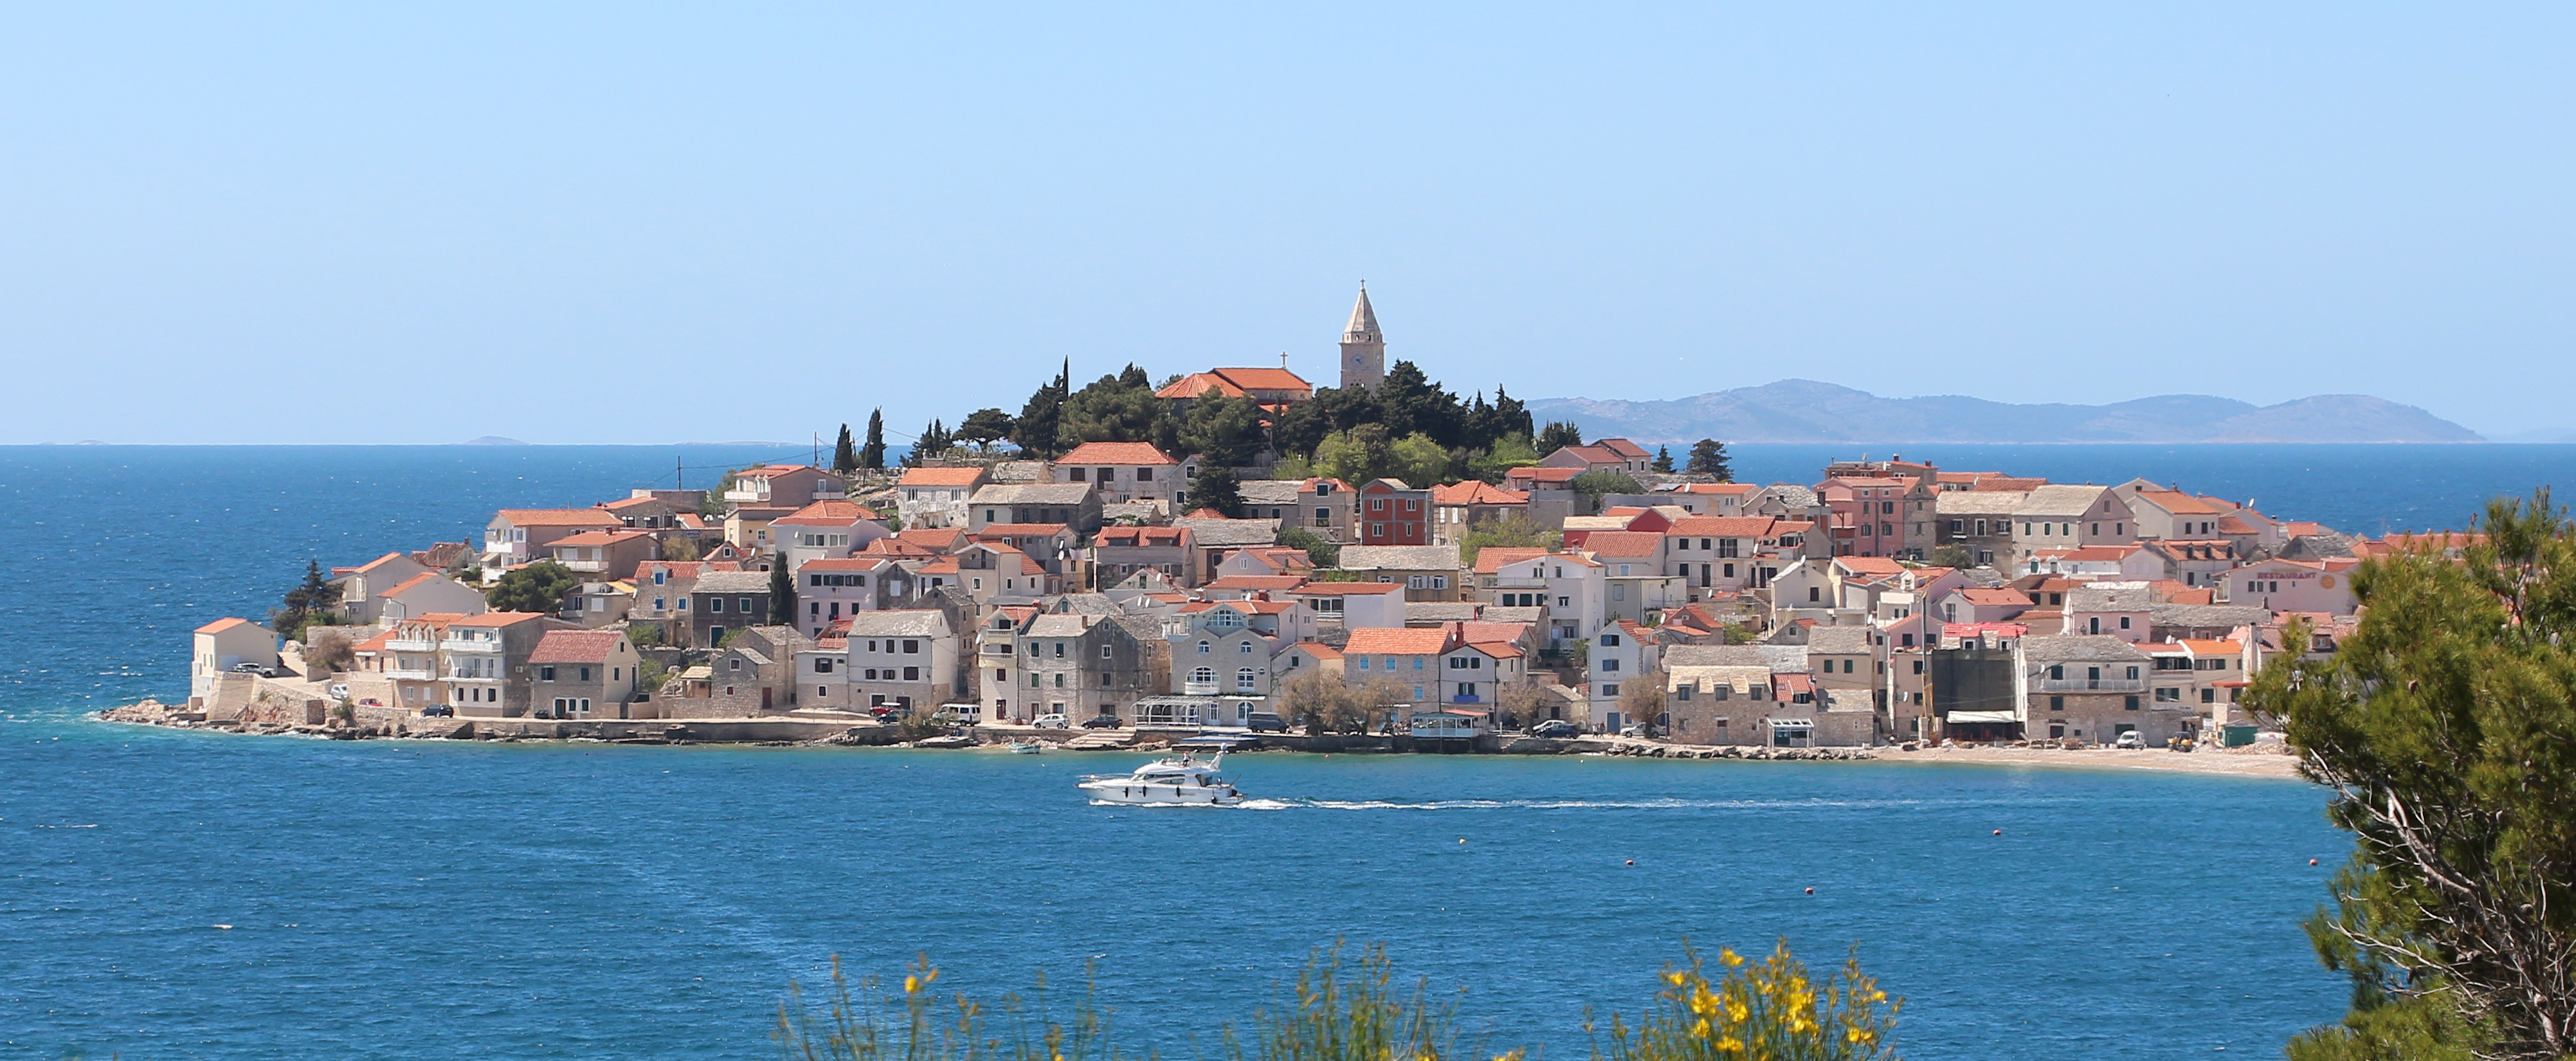 Visit Primošten – the most photogenic place on the Adriatic coast